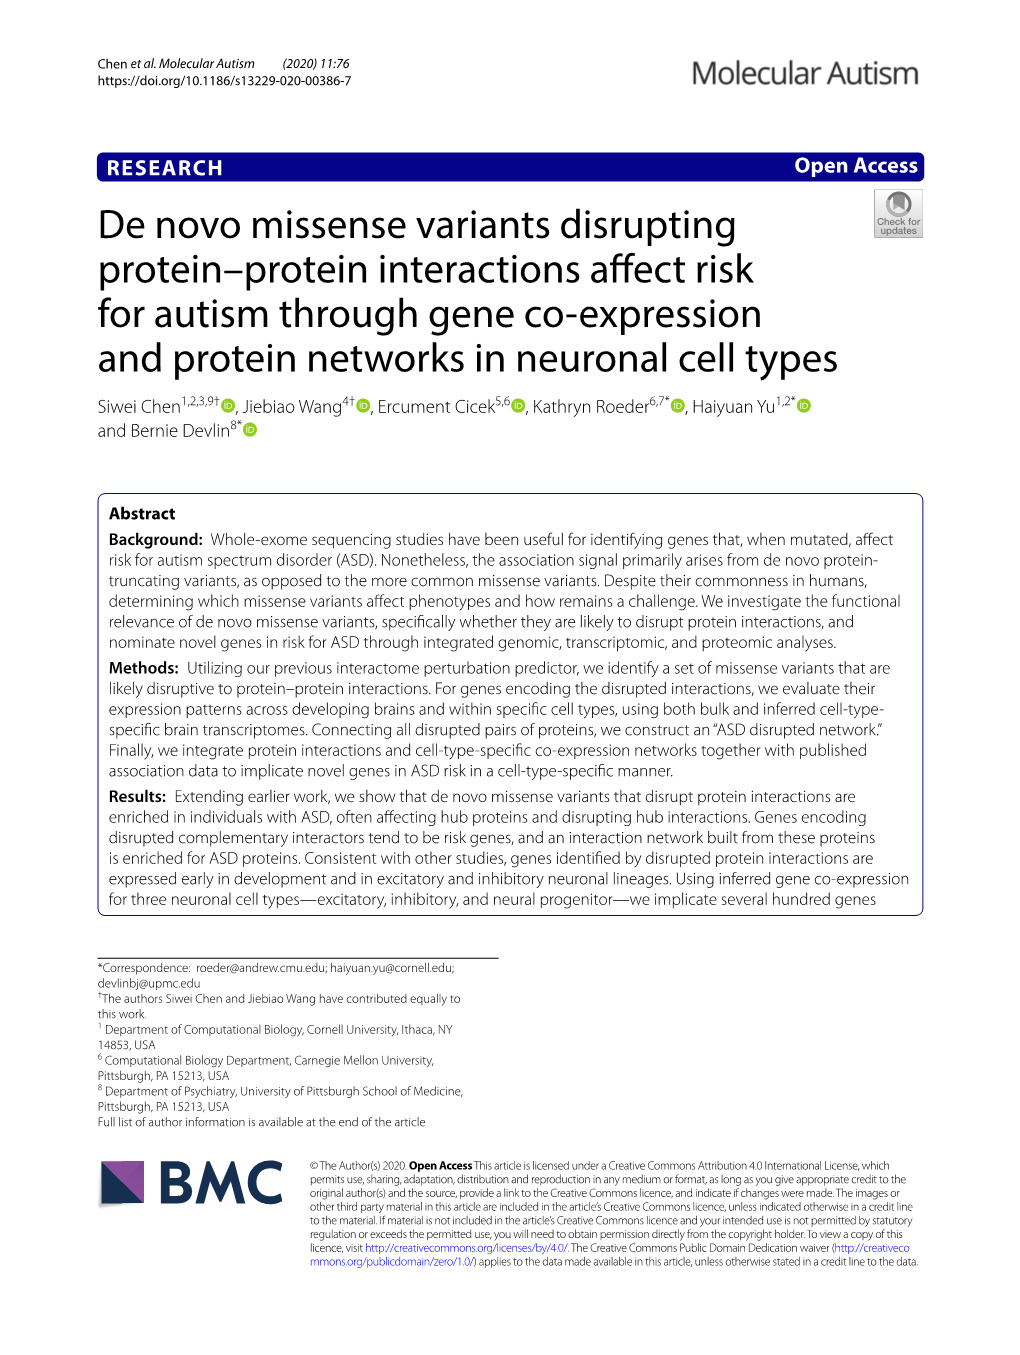 De Novo Missense Variants Disrupting Protein–Protein Interactions Affect